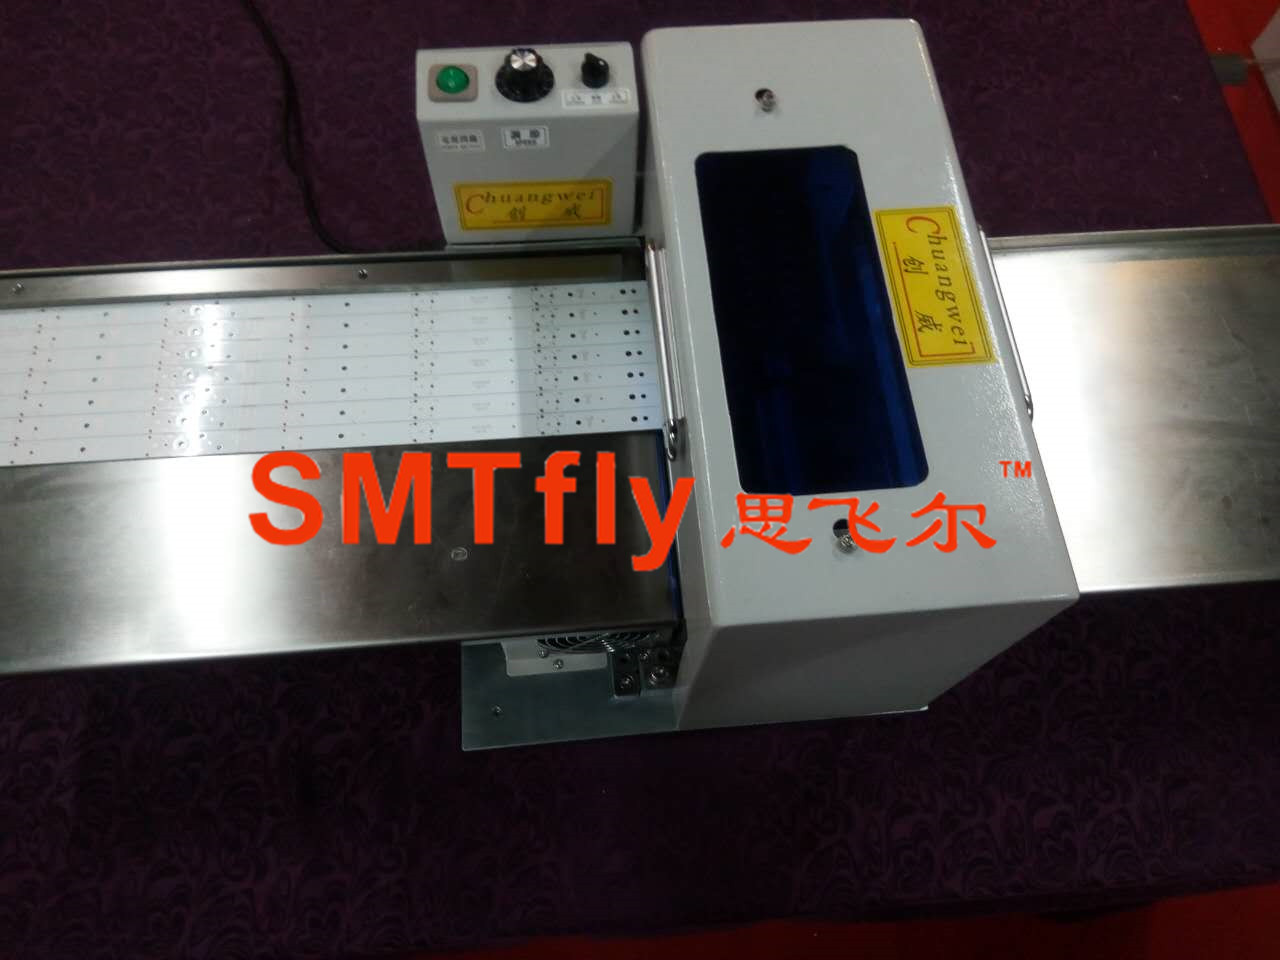 Multi PCB Cutting Machine,SMTfly-1SN